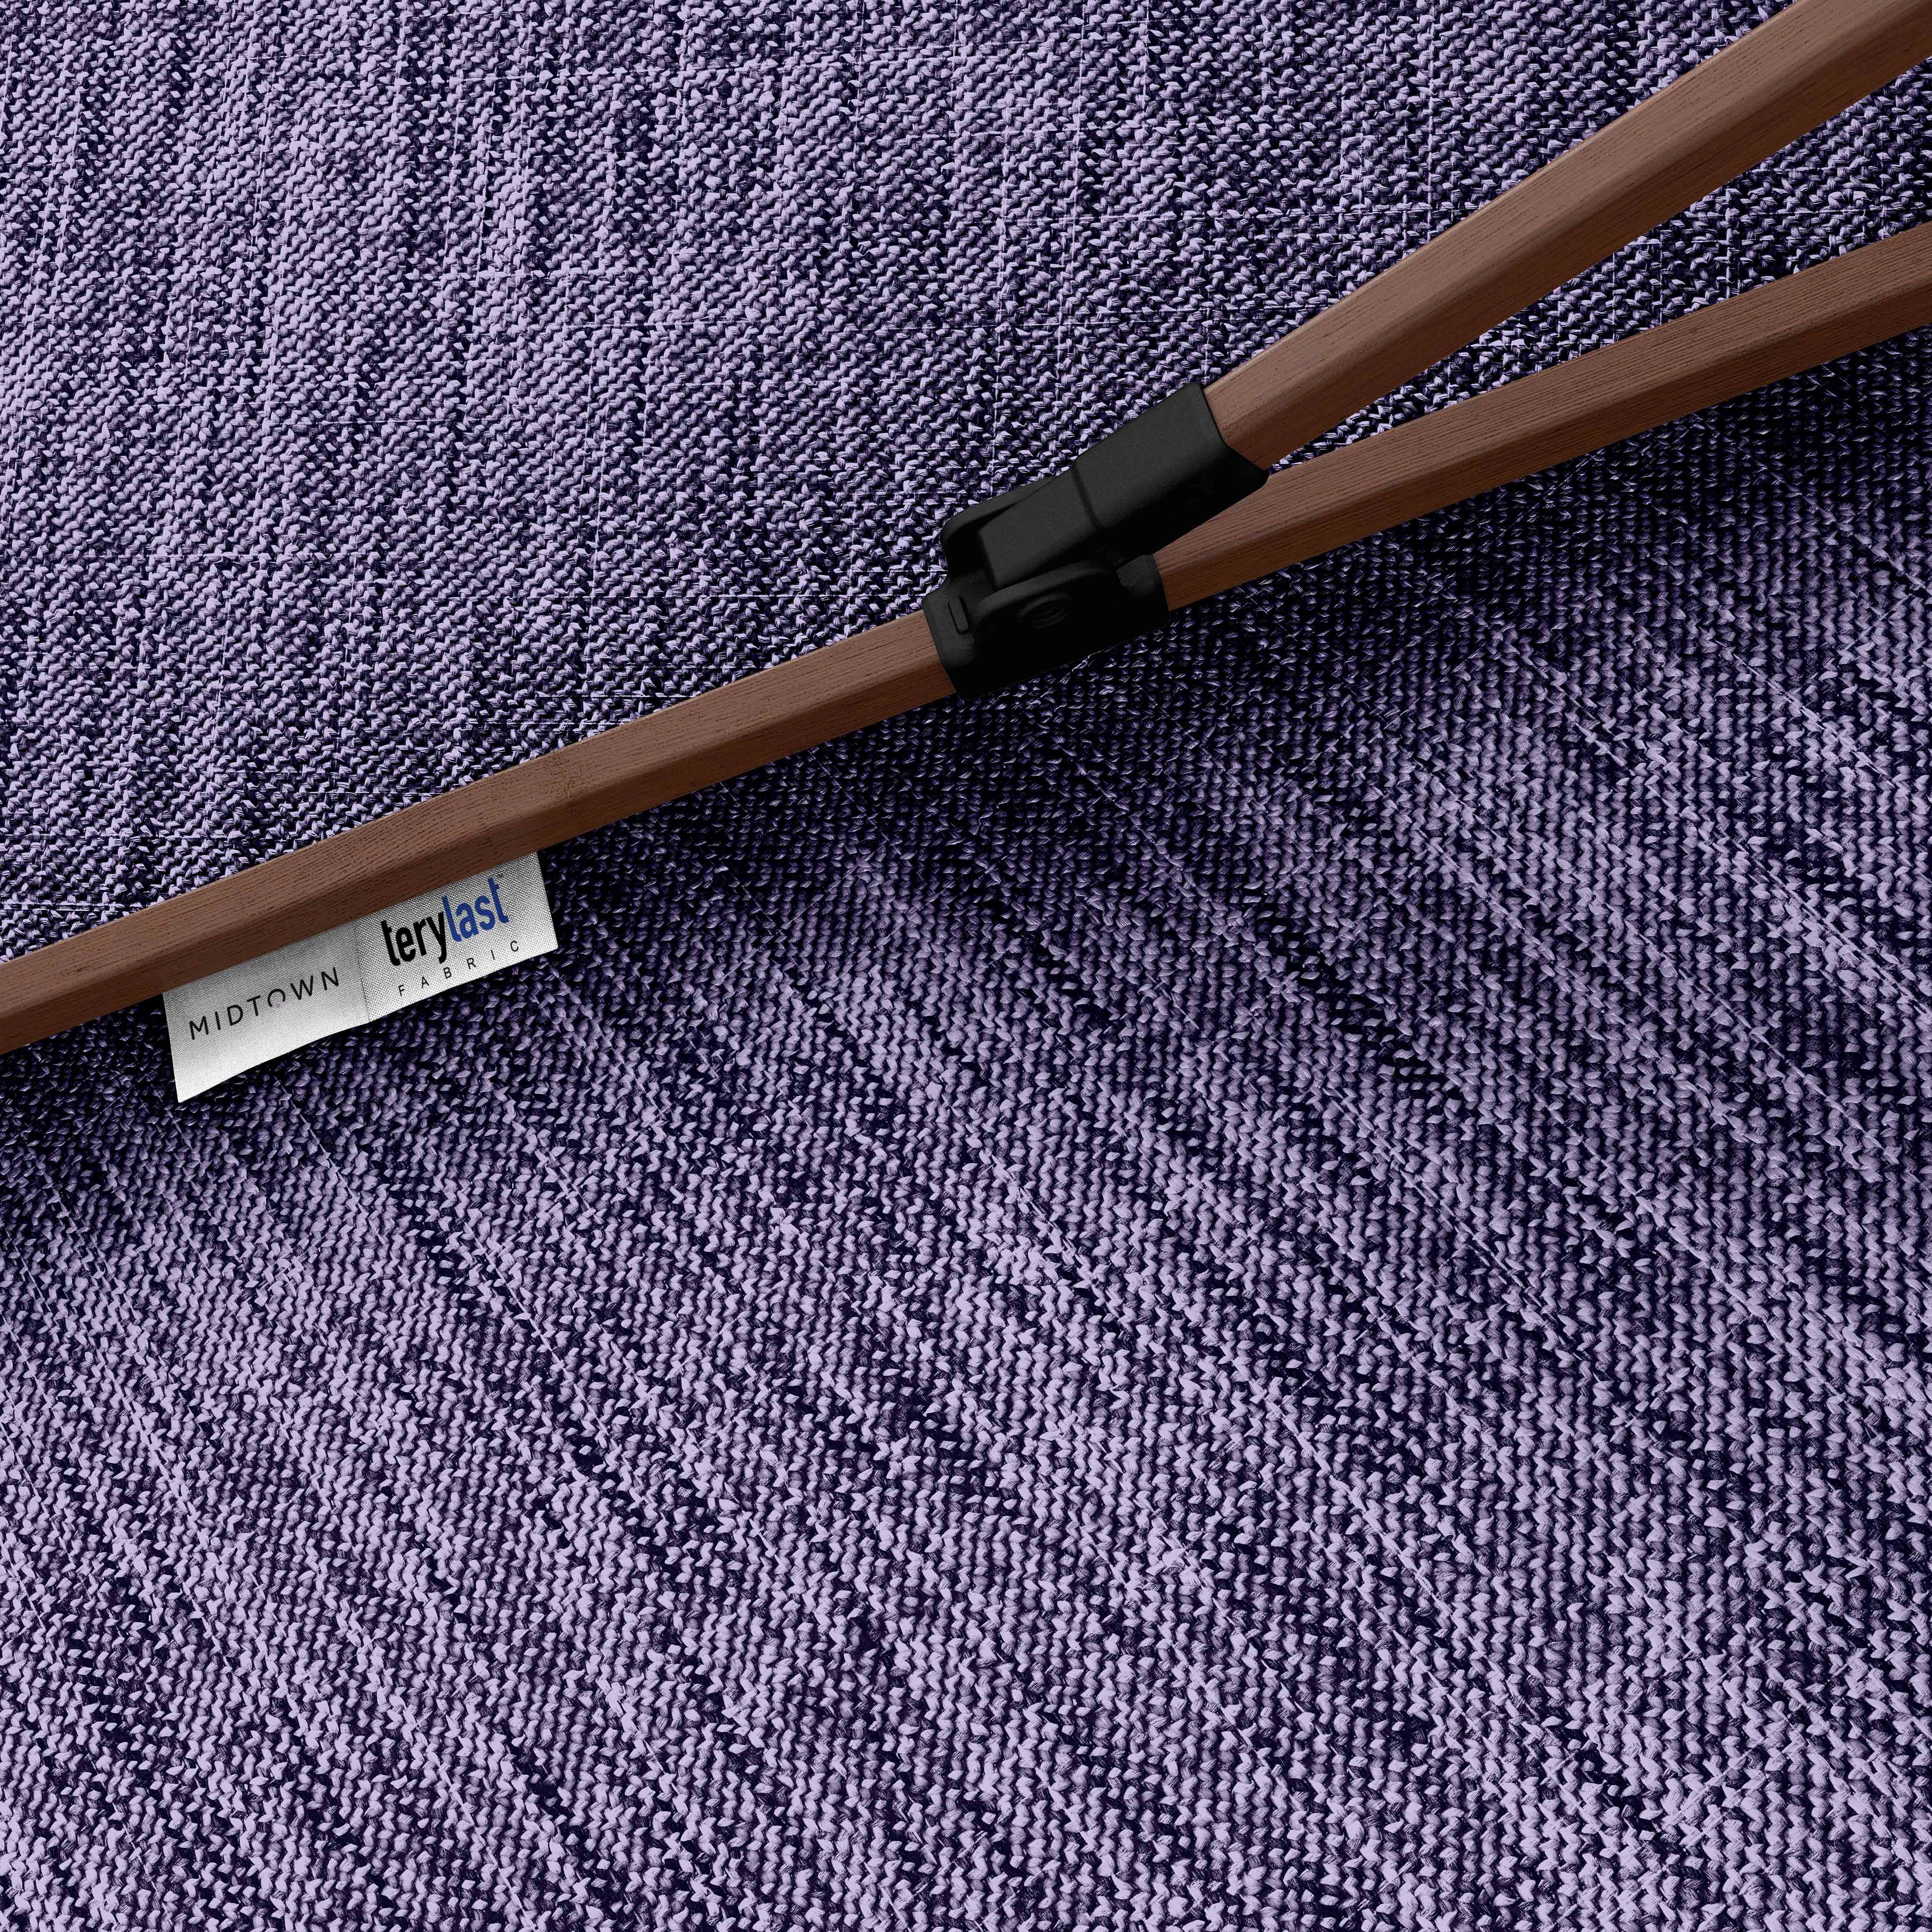 The Wooden™ - Terylast Textured Purple